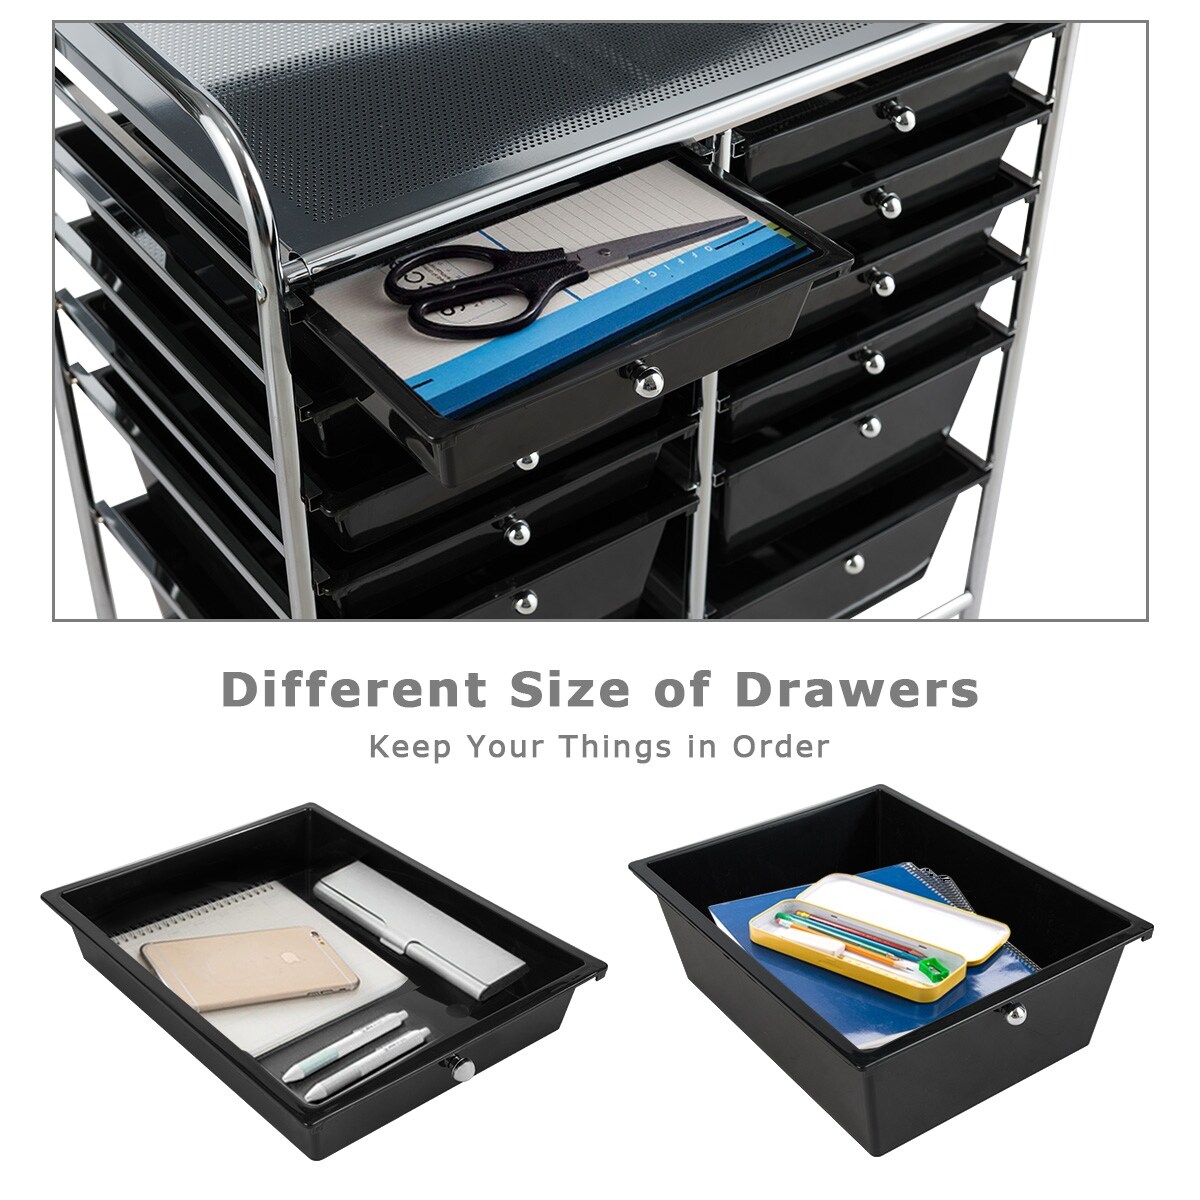 20 Drawers Rolling Storage Cart Studio Organizer - Costway